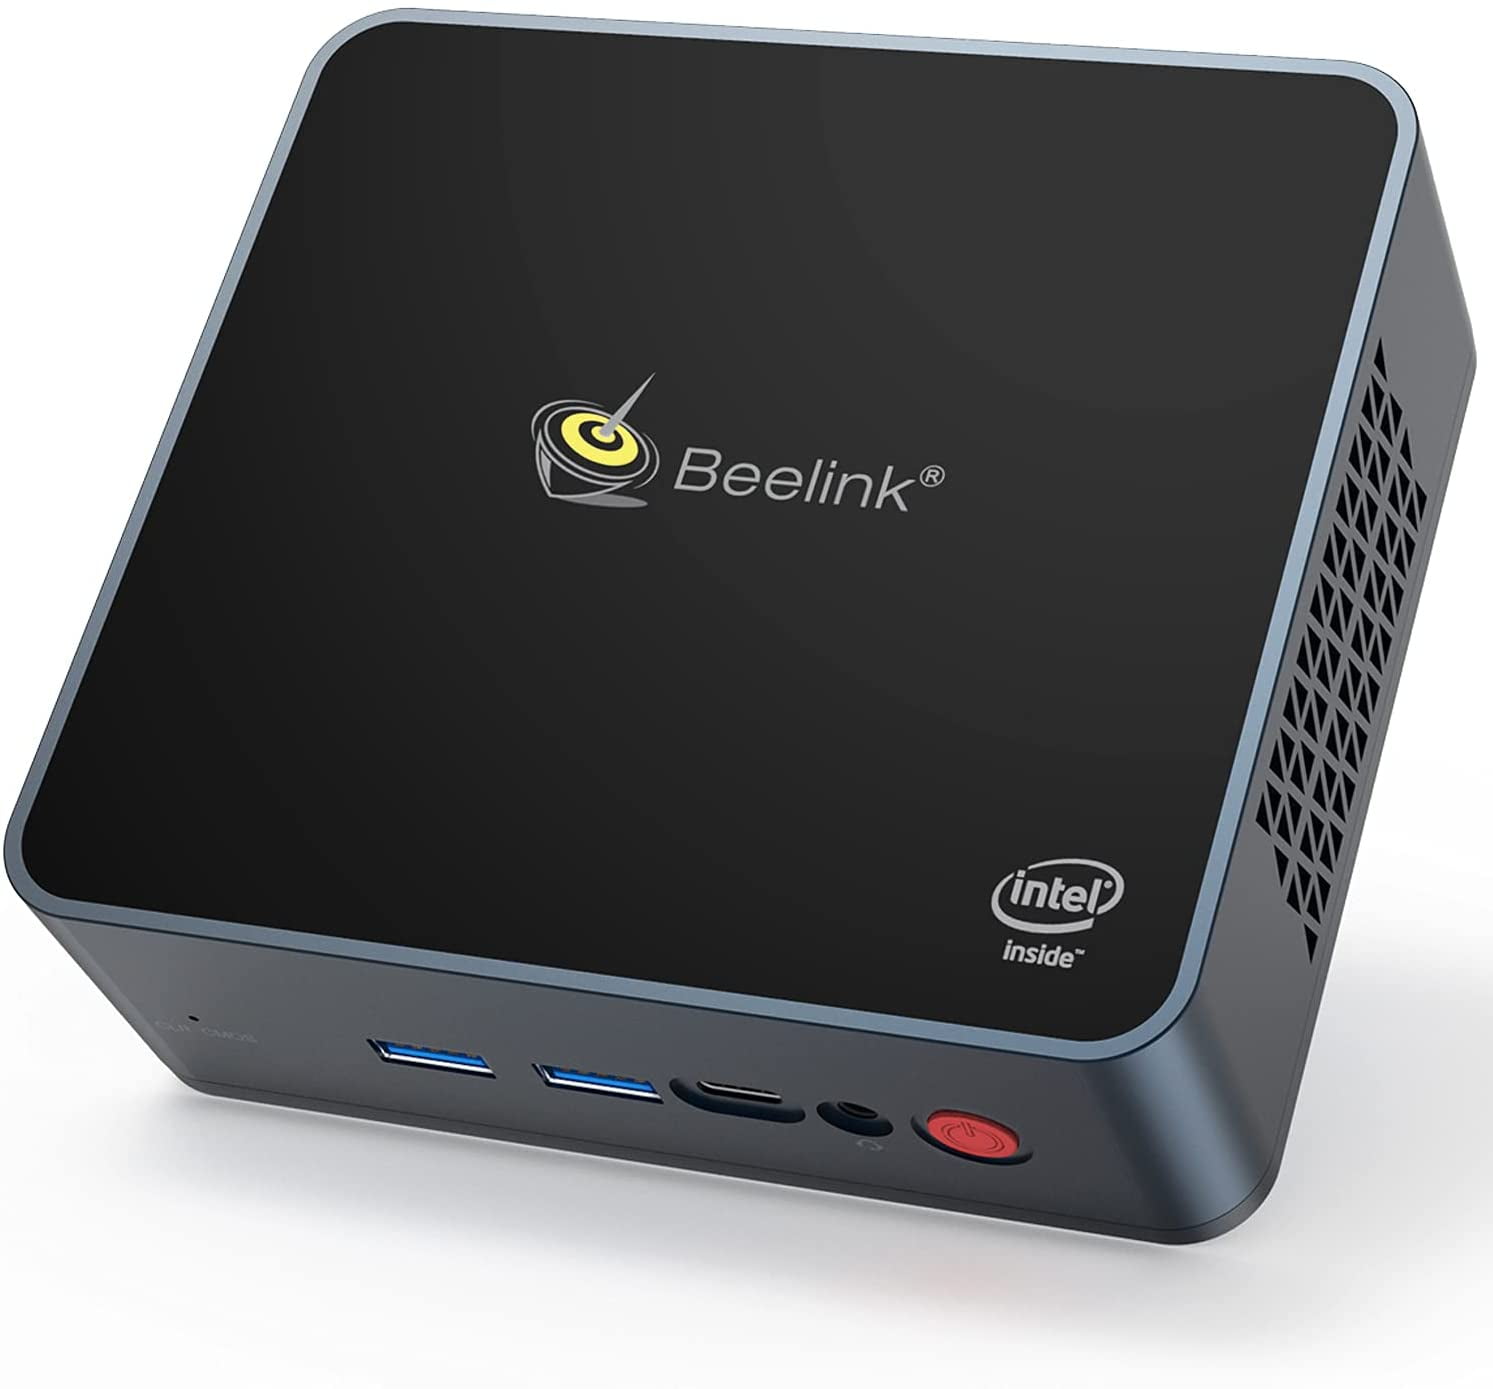 Mini PC Beelink GK55 Intel Gemini Lake Processor J4125 up to 2.7GHz Windows 10 Pro,8G LPDDR4/256G SSD High Performance Business Mini Computer,4K UHD,2.4G/5G Dual WiFi,BT4.0,Dual HDMI Ports,Dual Gigabit Ethernet